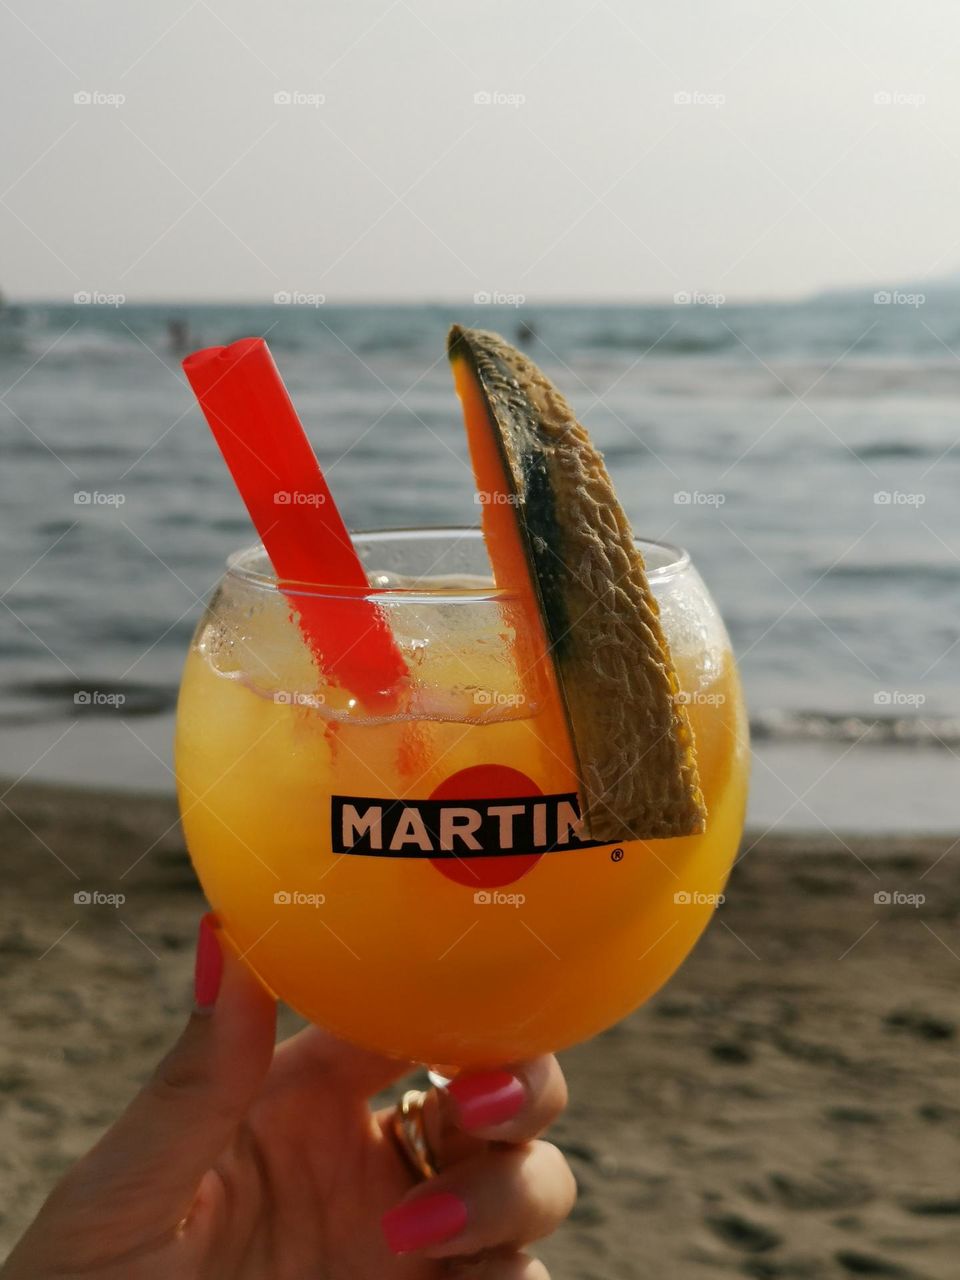 Liquids are cool. Tasty cocktail. Enjoy moments. Summer mood. Sea.